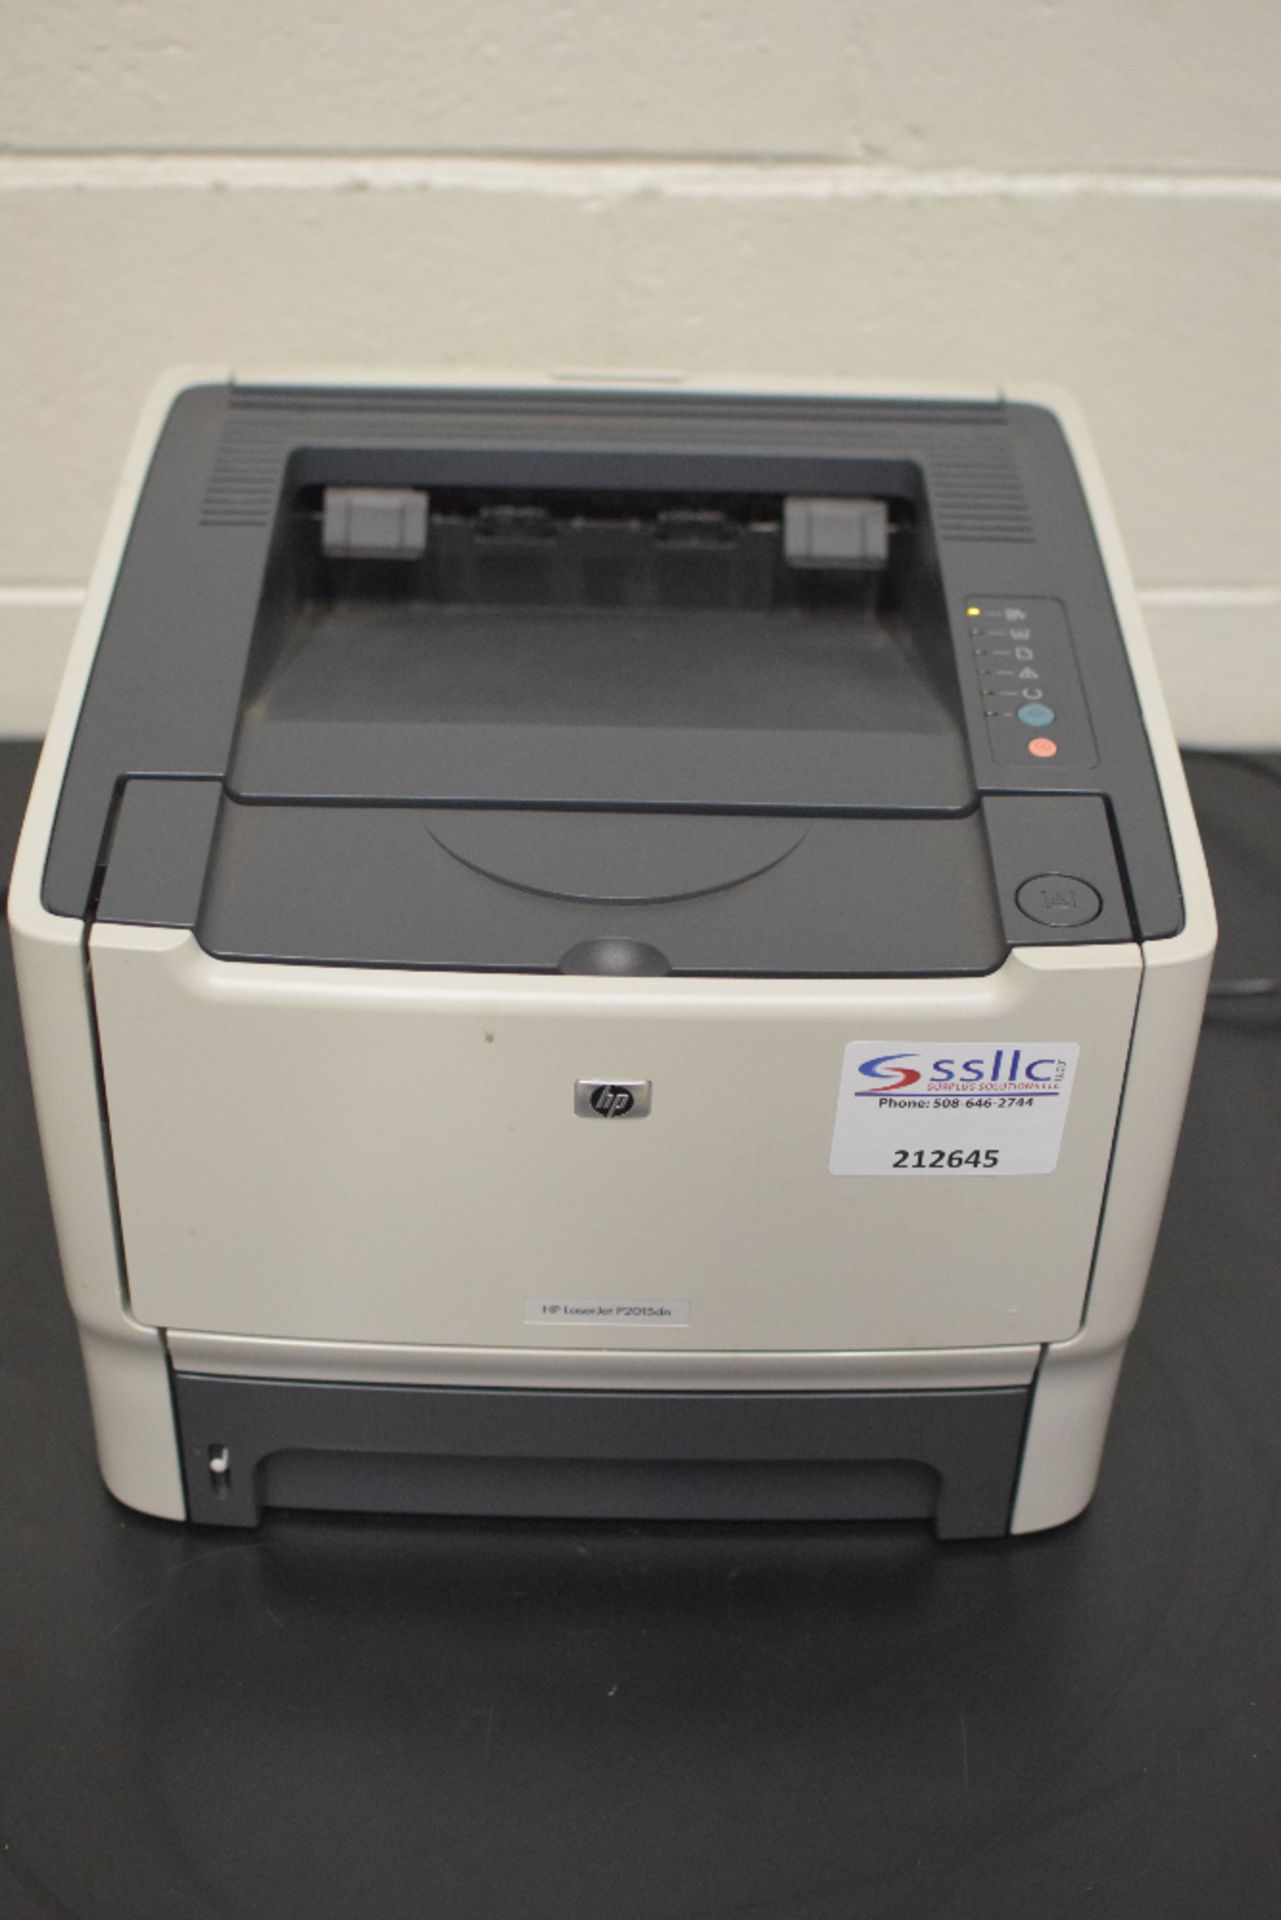 hp LaserJet P2015dn Printer